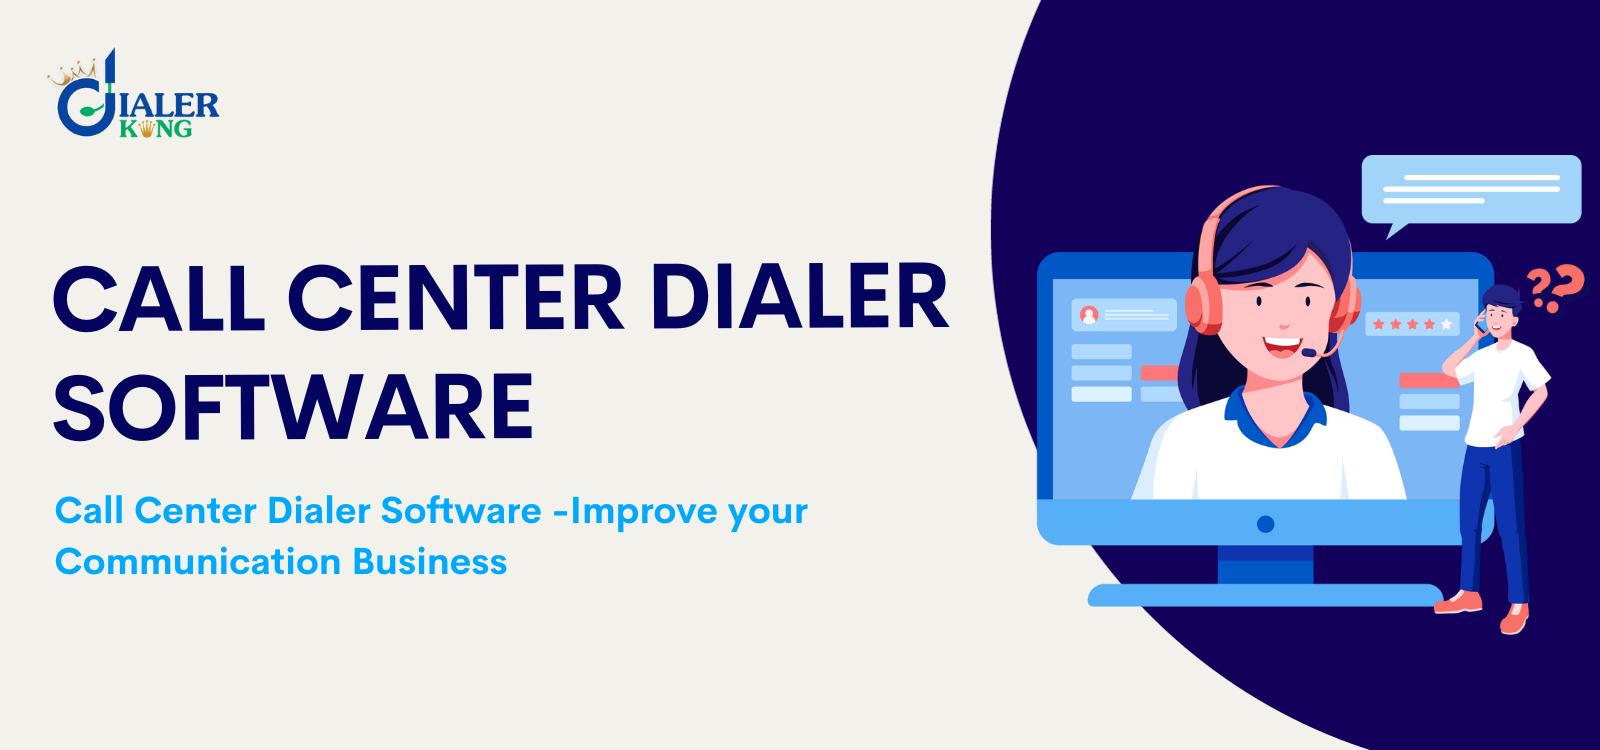 Call Center Dialer Software